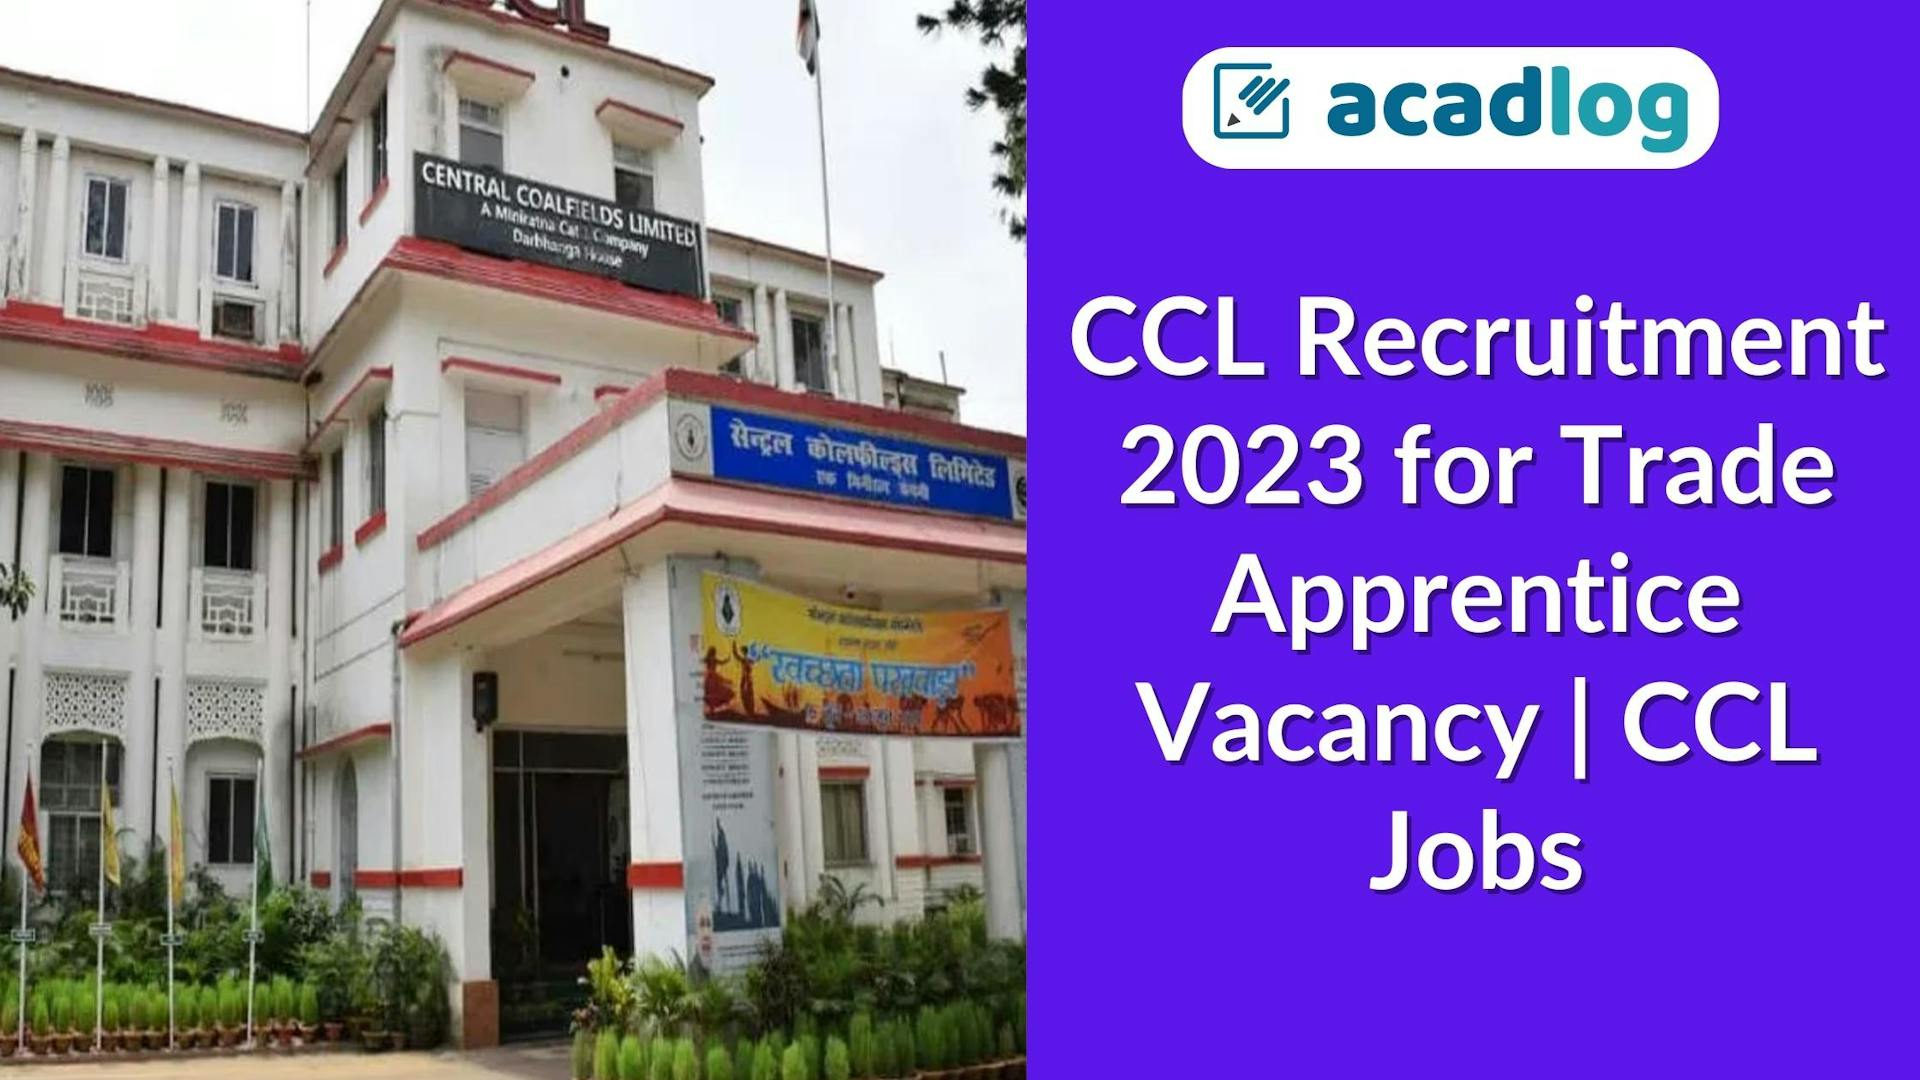 CCL Recruitment 2023 for Trade Apprentice Vacancy | CCL Jobs